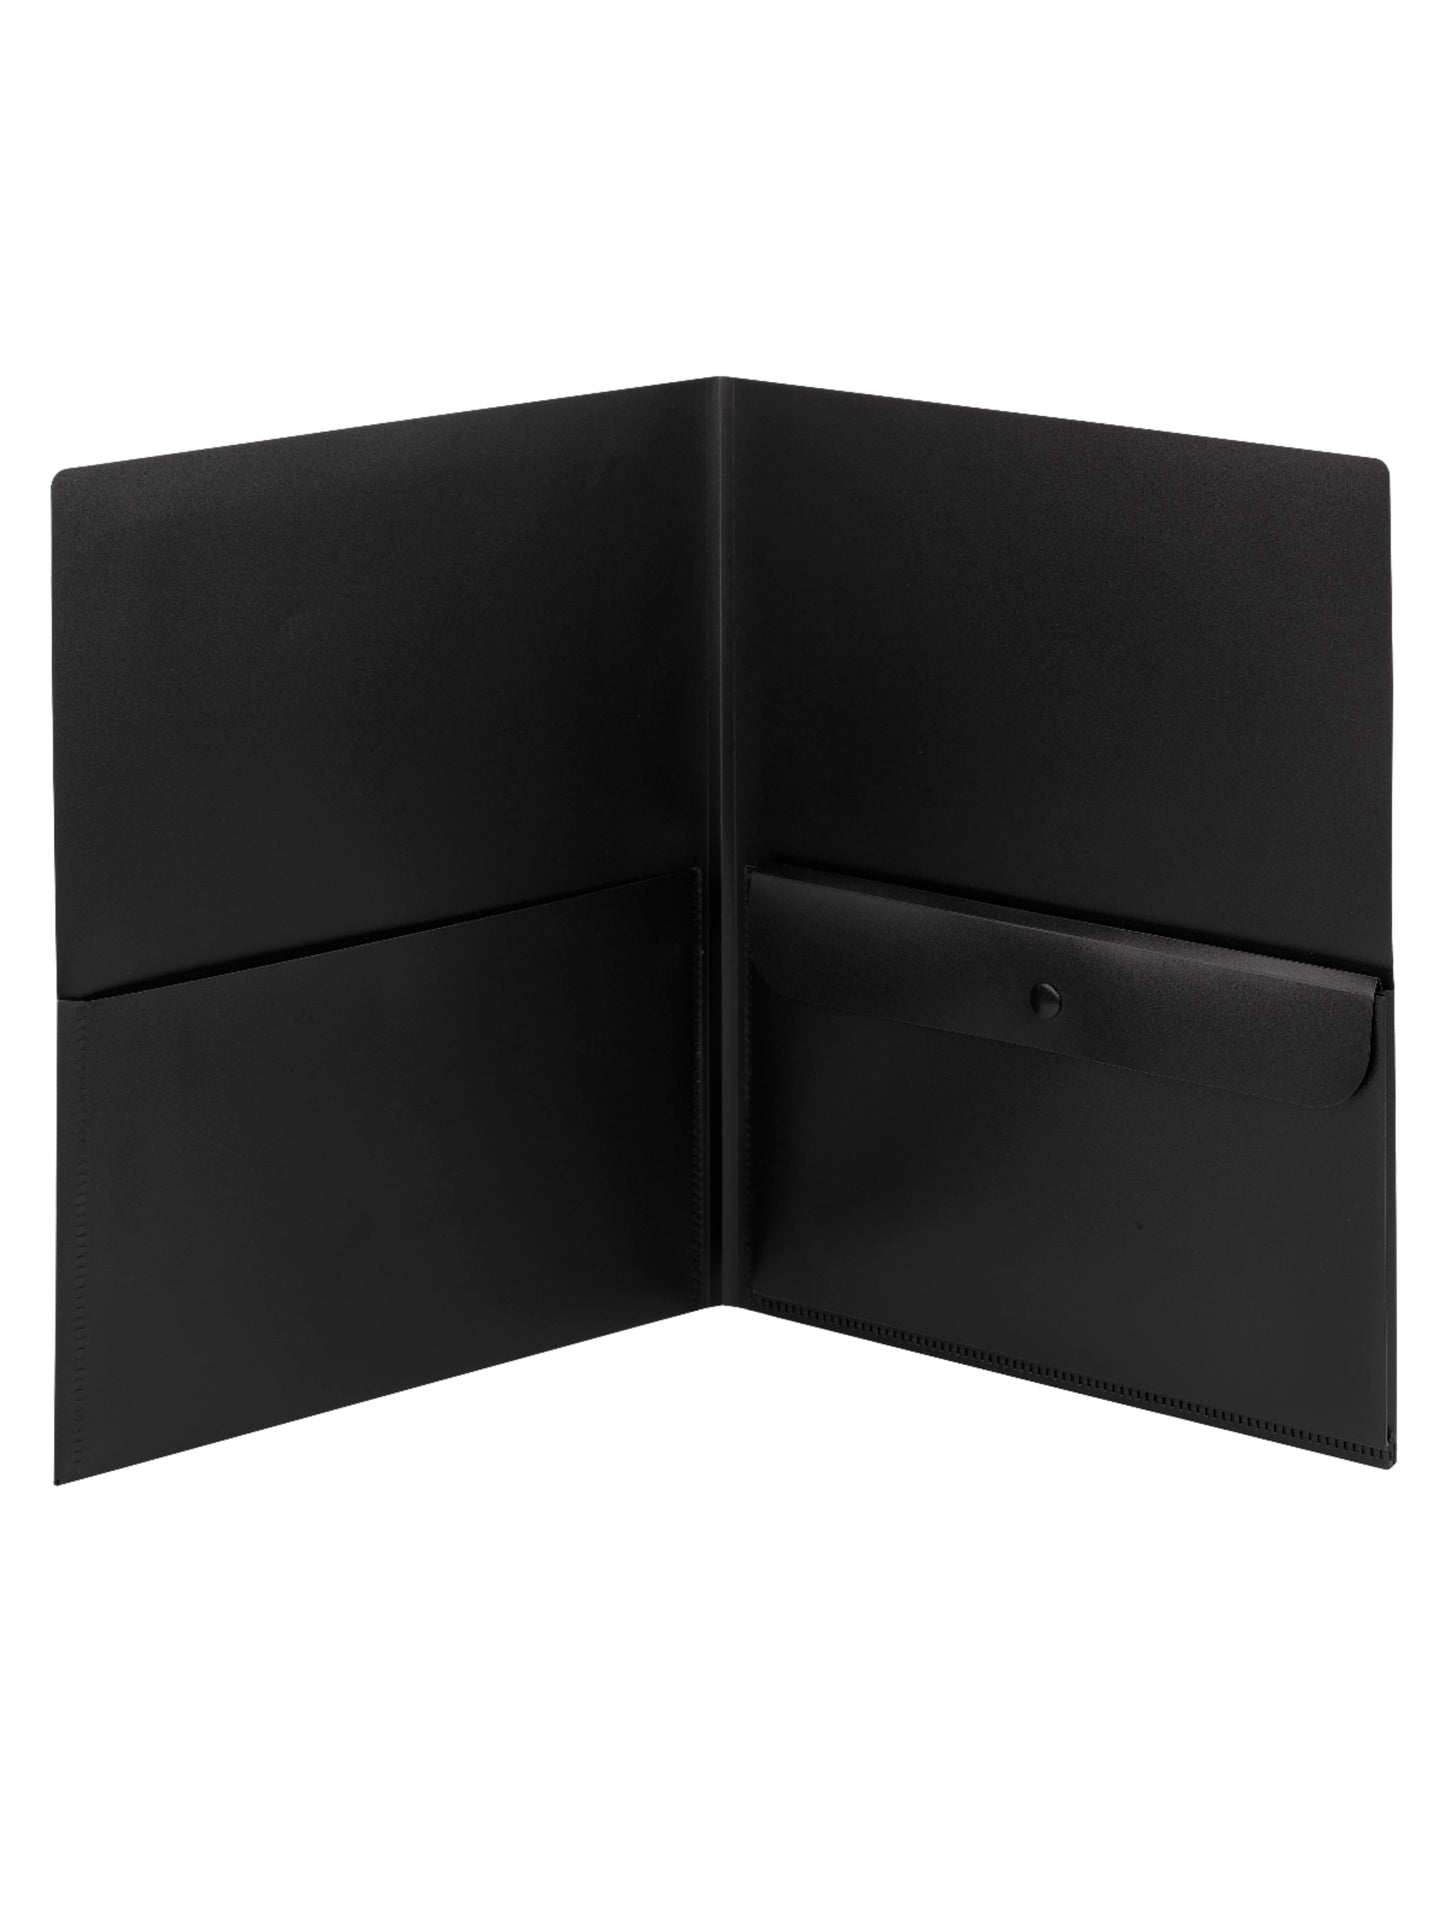 Poly Two-Pocket Folders with Security Pocket, Black Color, Letter Size, Set of 1, 086486877008